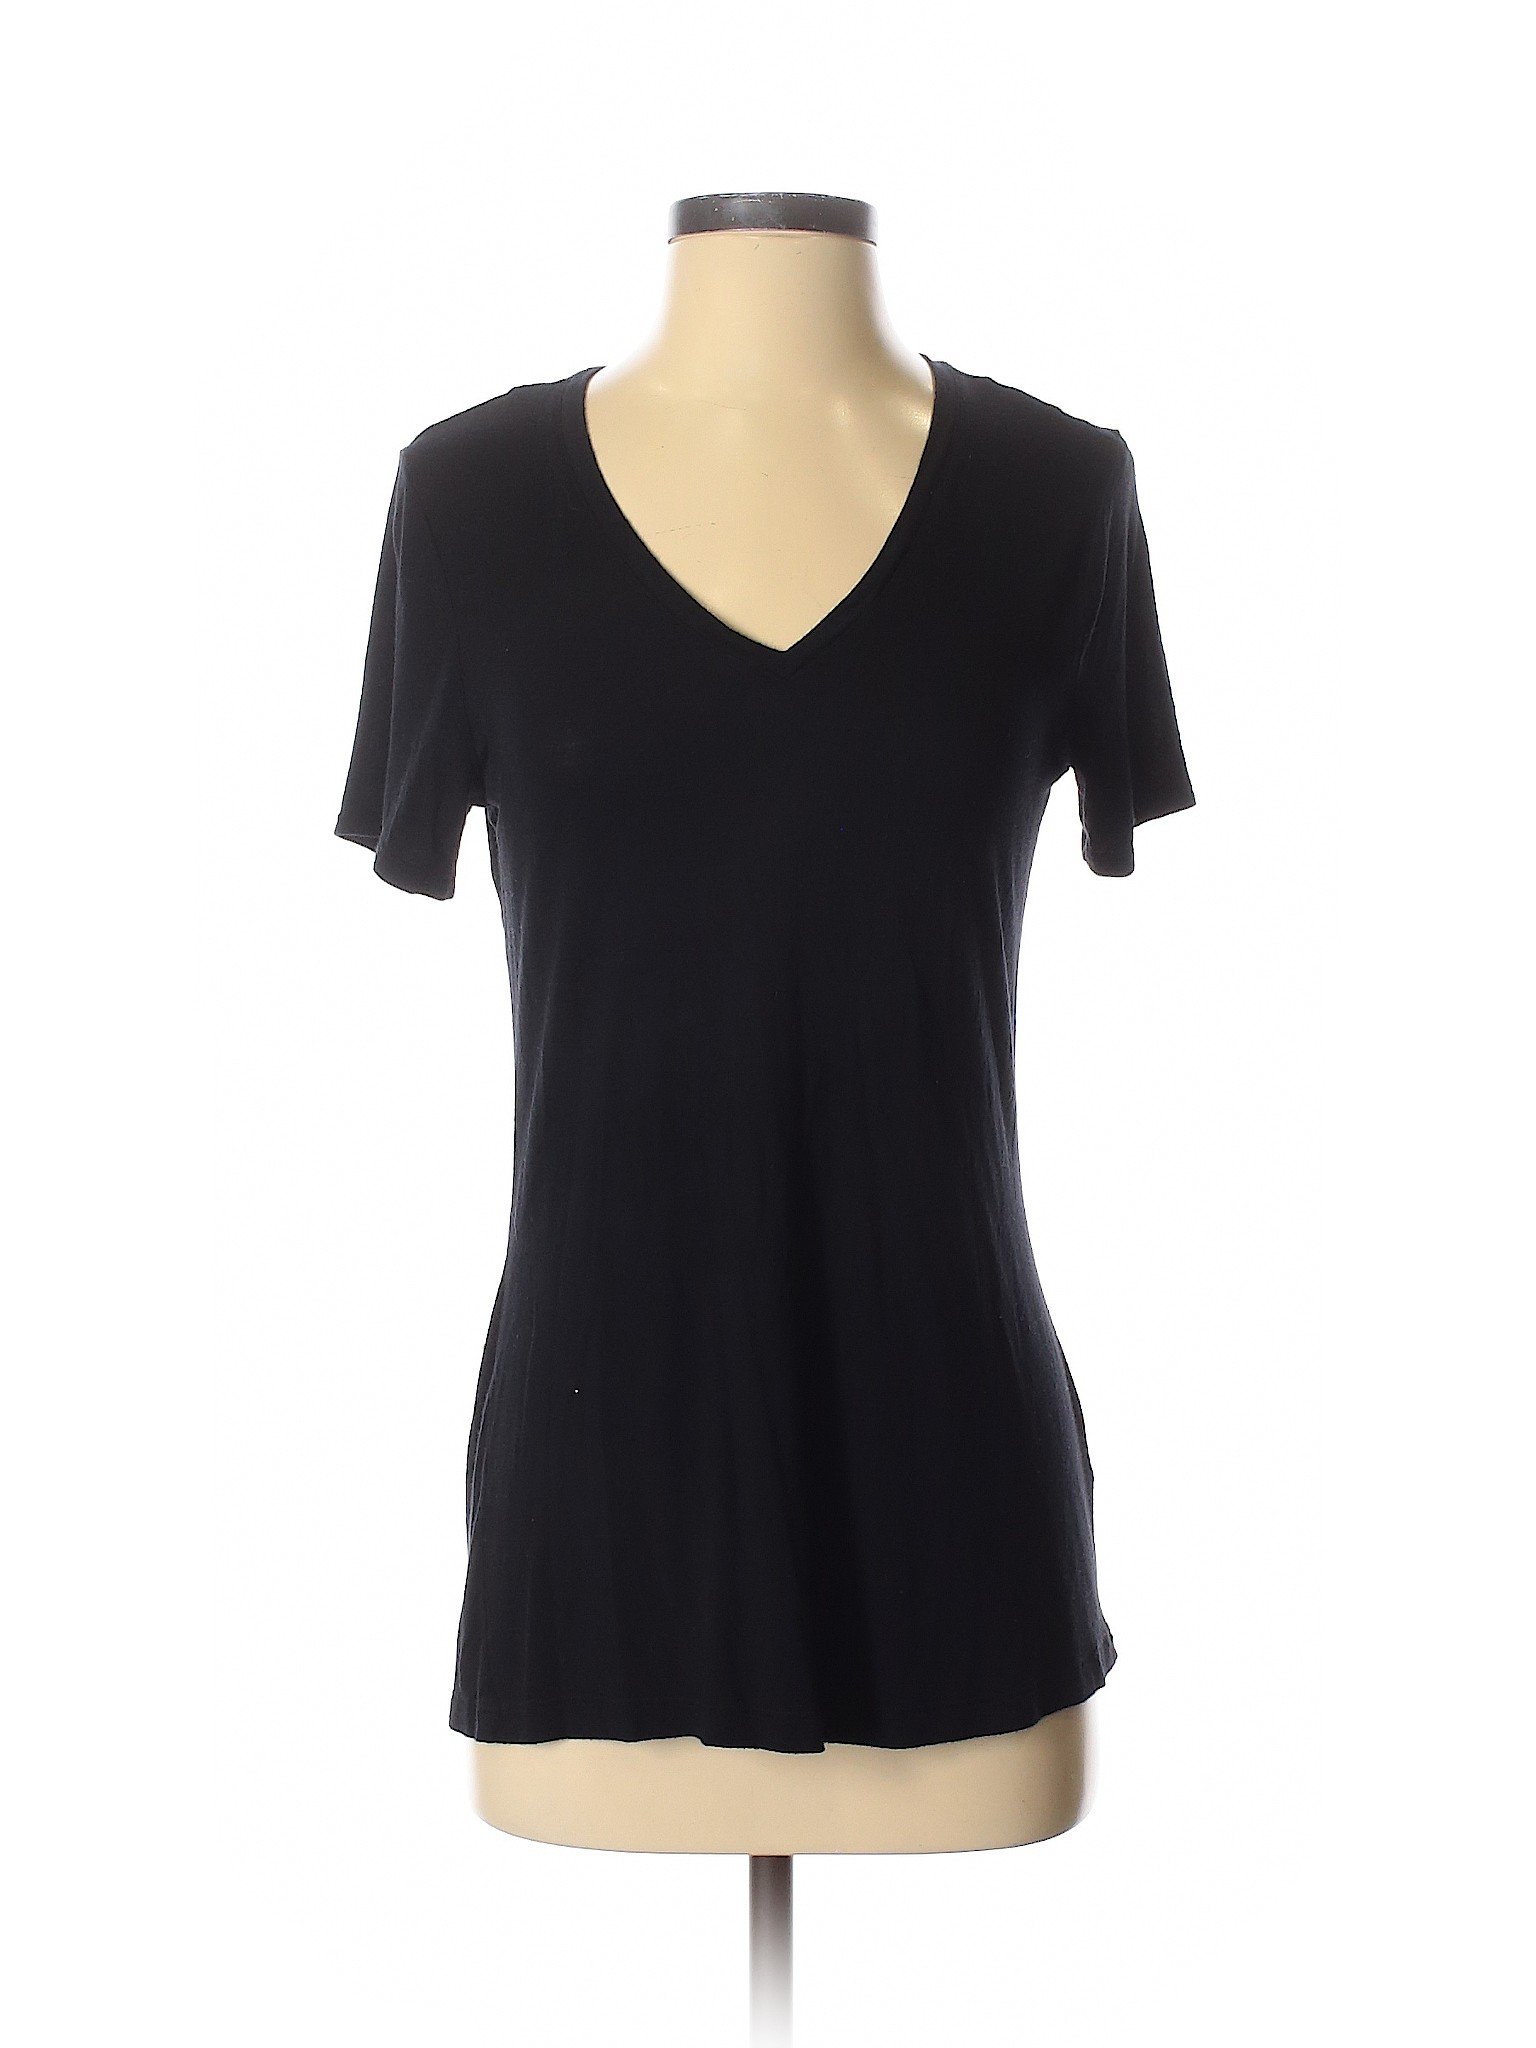 Apt. 9 Women Black Short Sleeve T-Shirt S | eBay